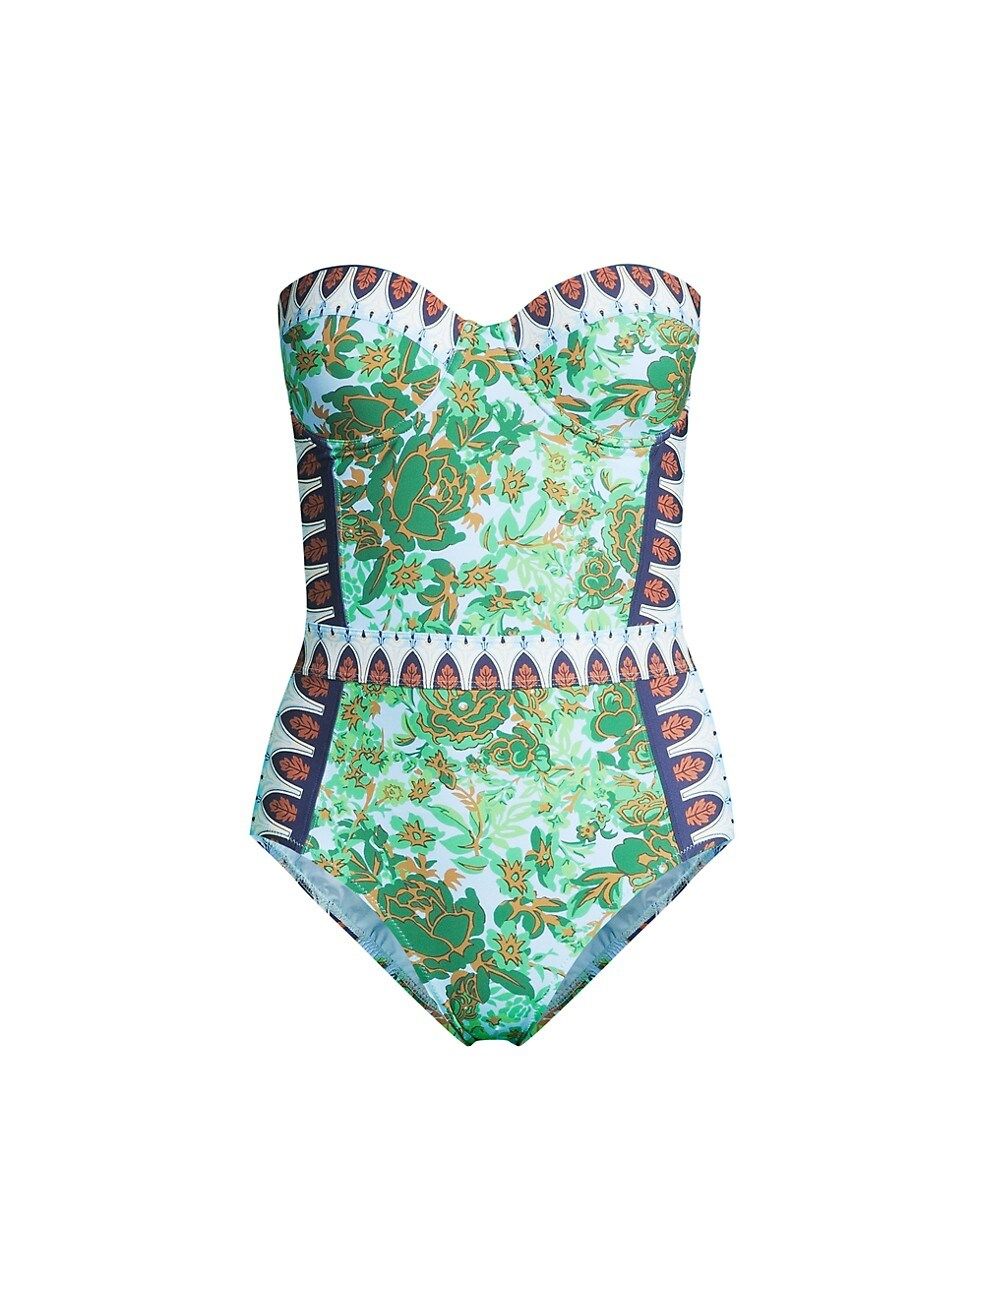 Tory Burch Lipsi Floral One-Piece Swimsuit | Saks Fifth Avenue